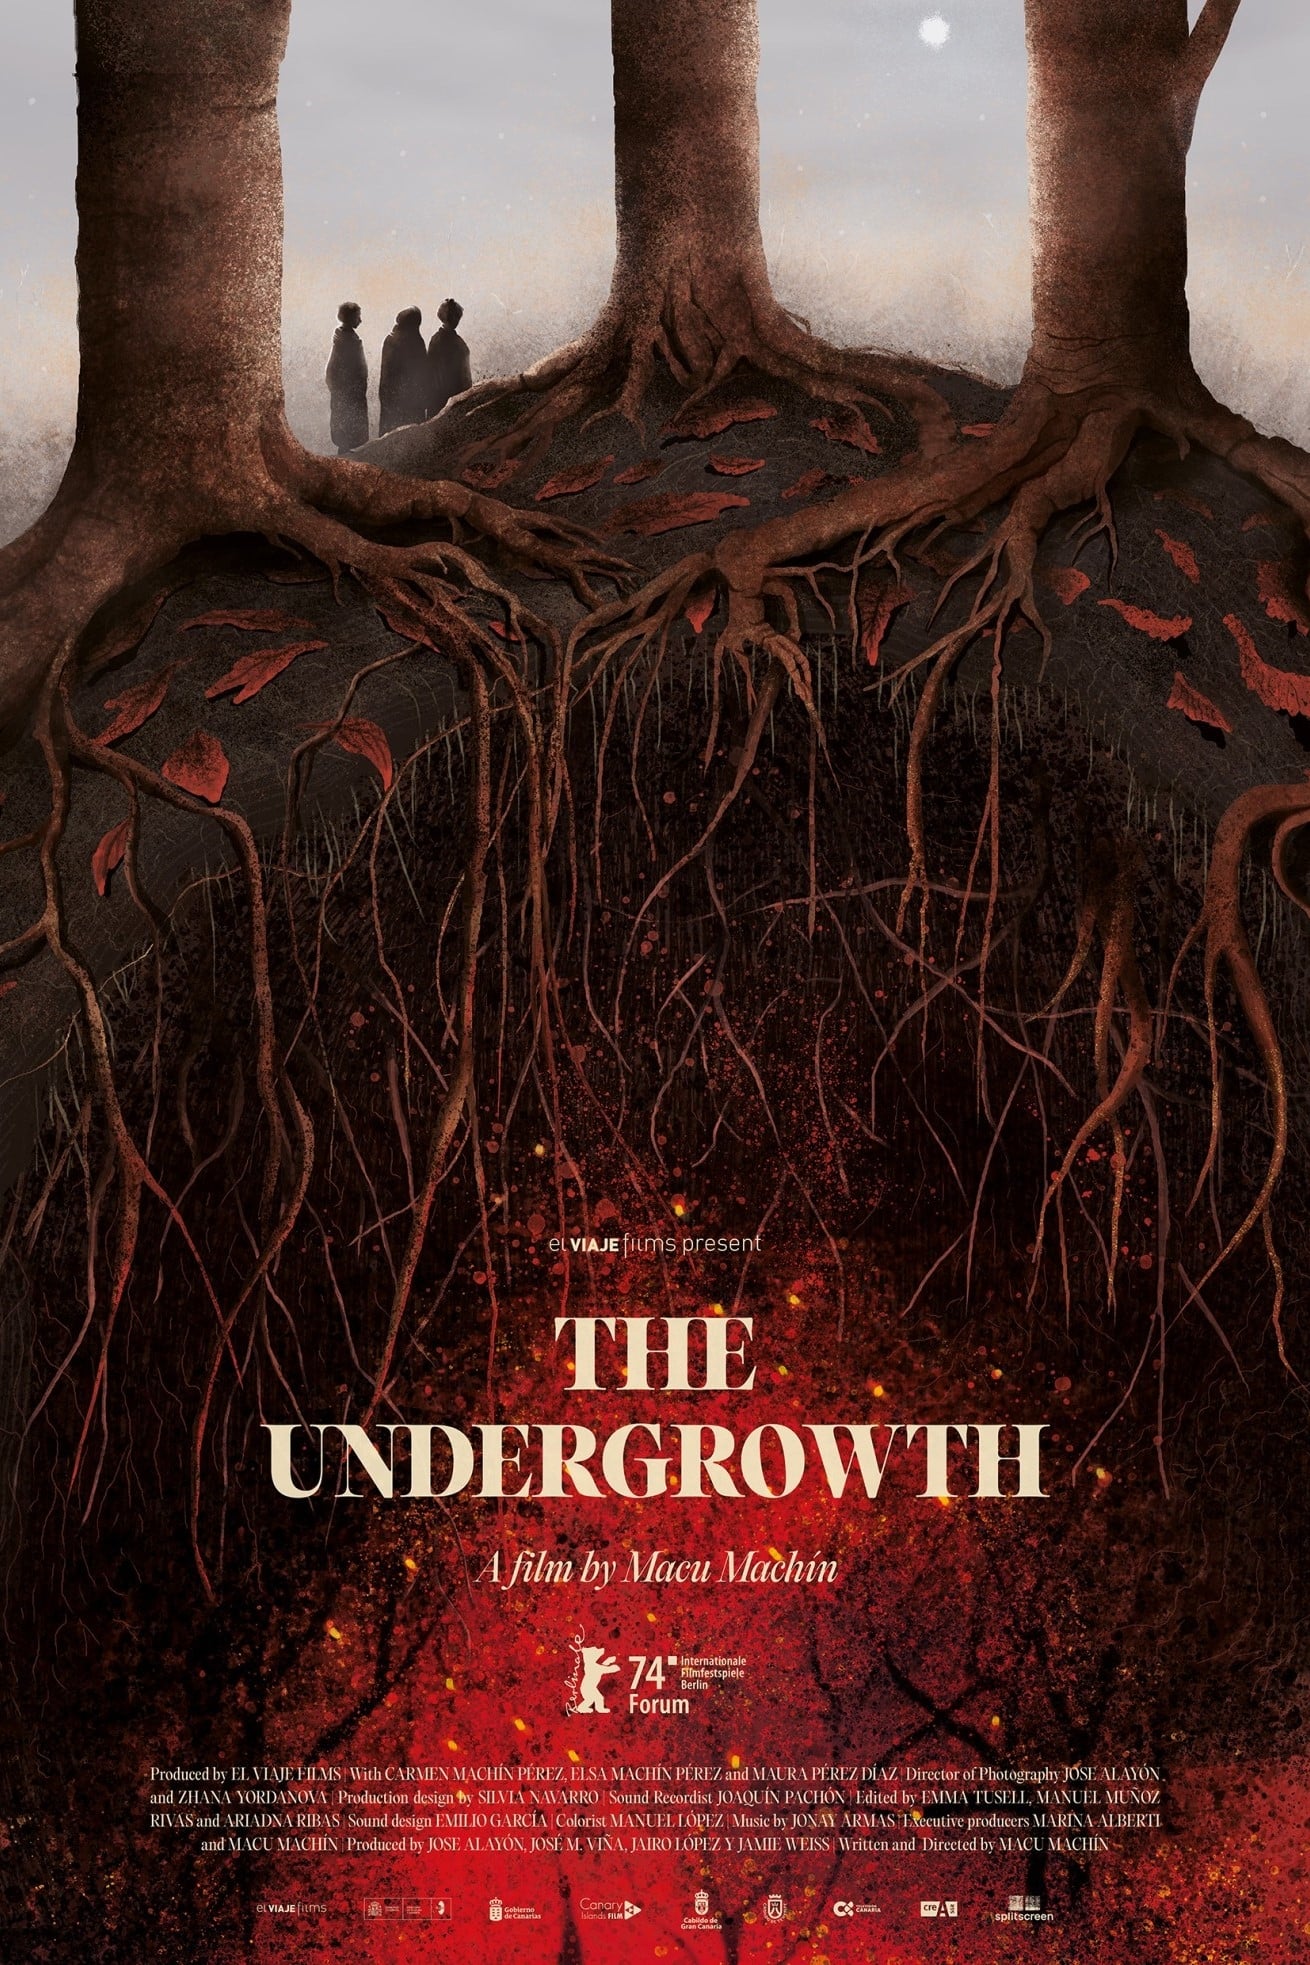 The Undergrowth